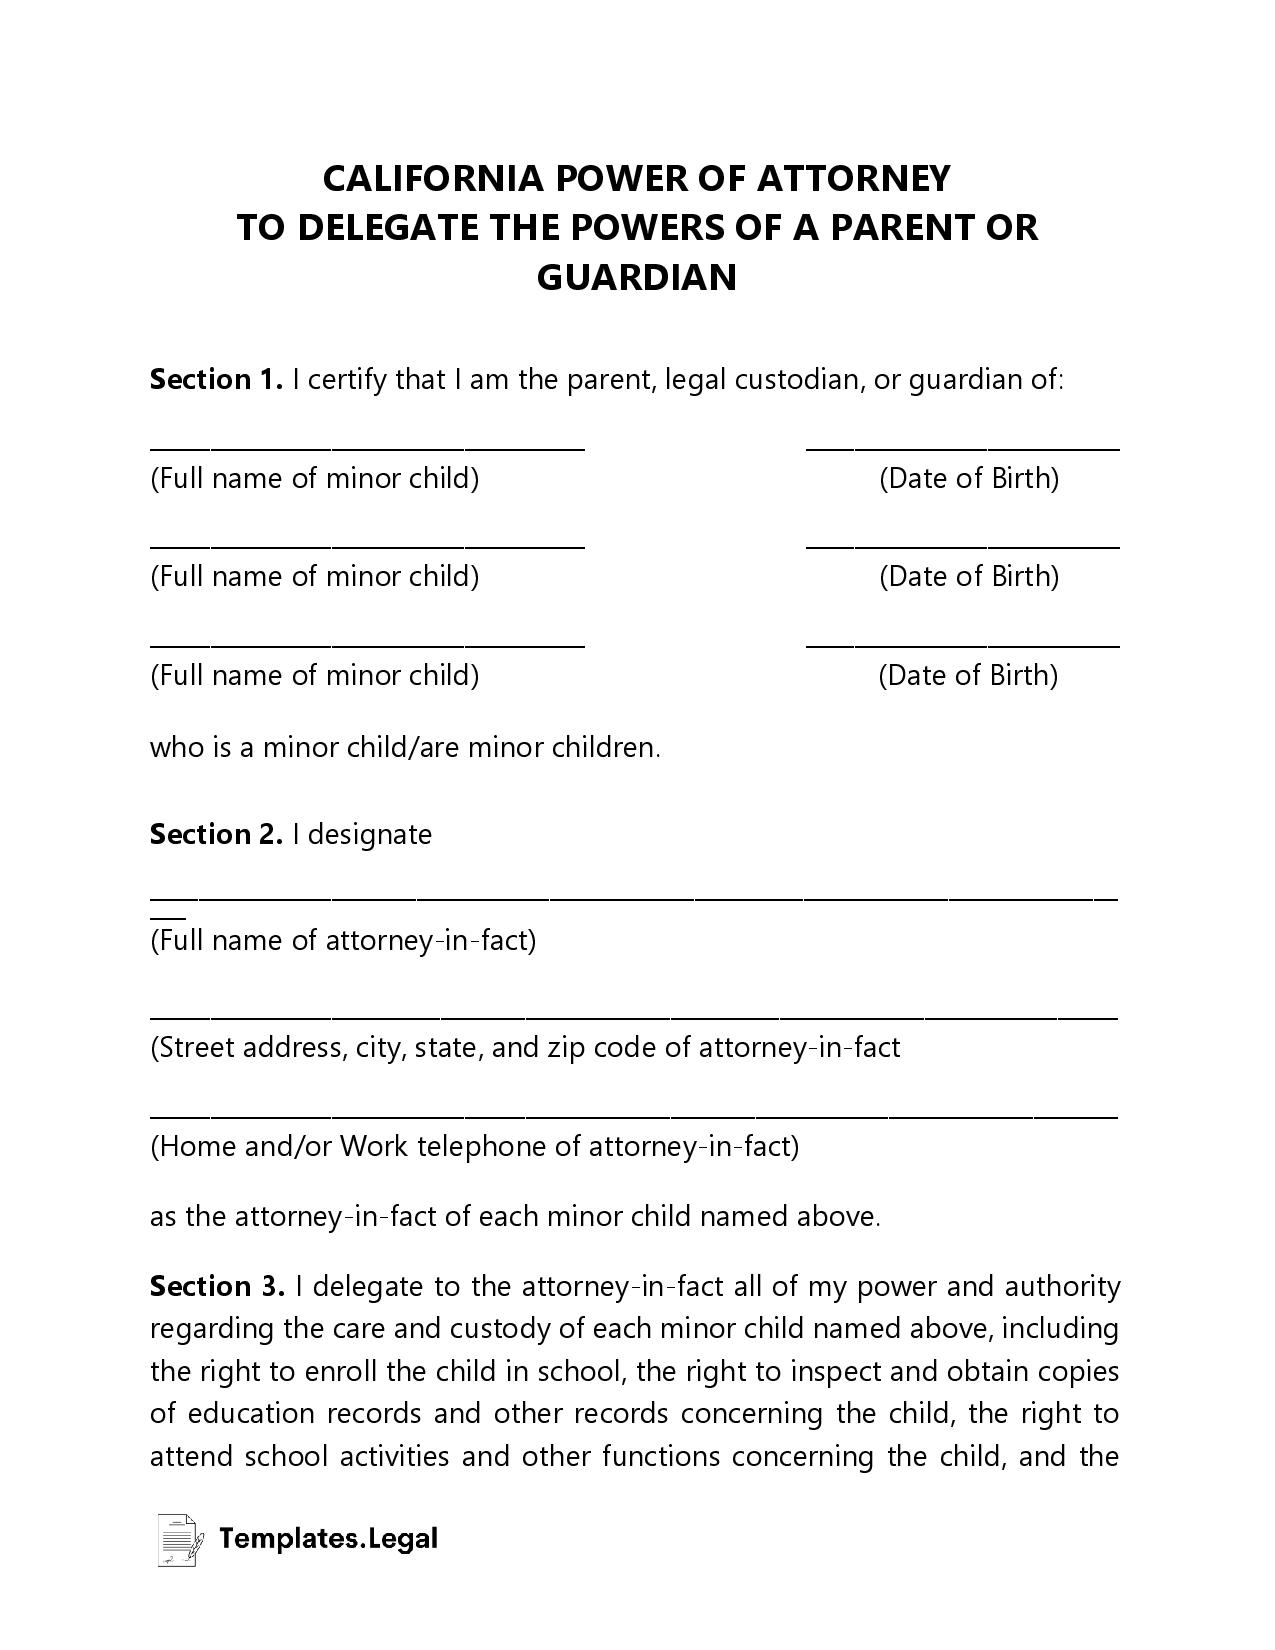 California Minor (Child) Power of Attorney - Templates.Legal